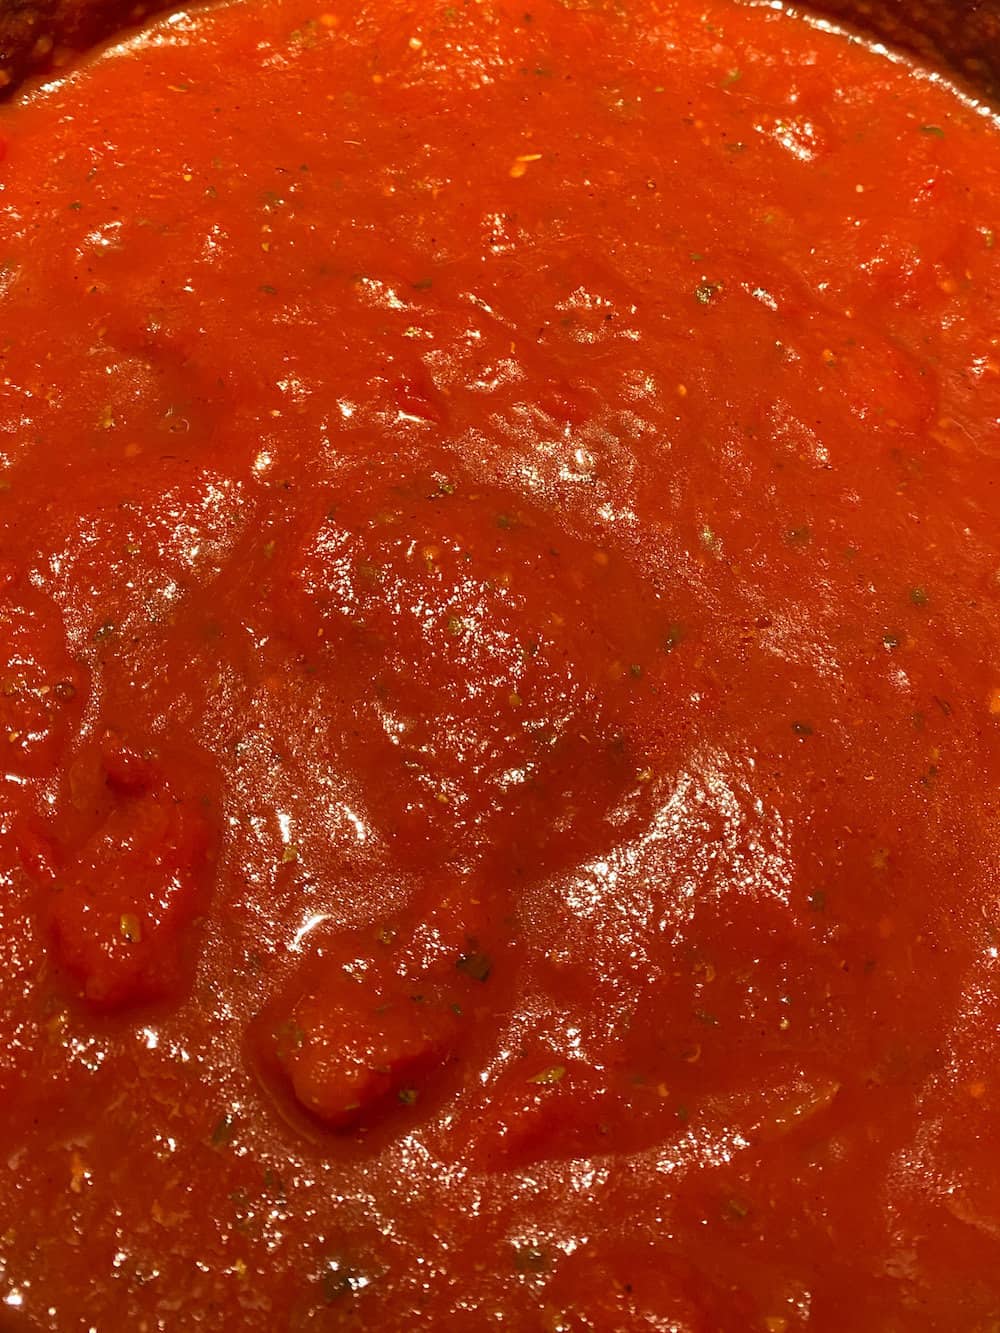 photo of traditional Italian pasta sauce or marinara